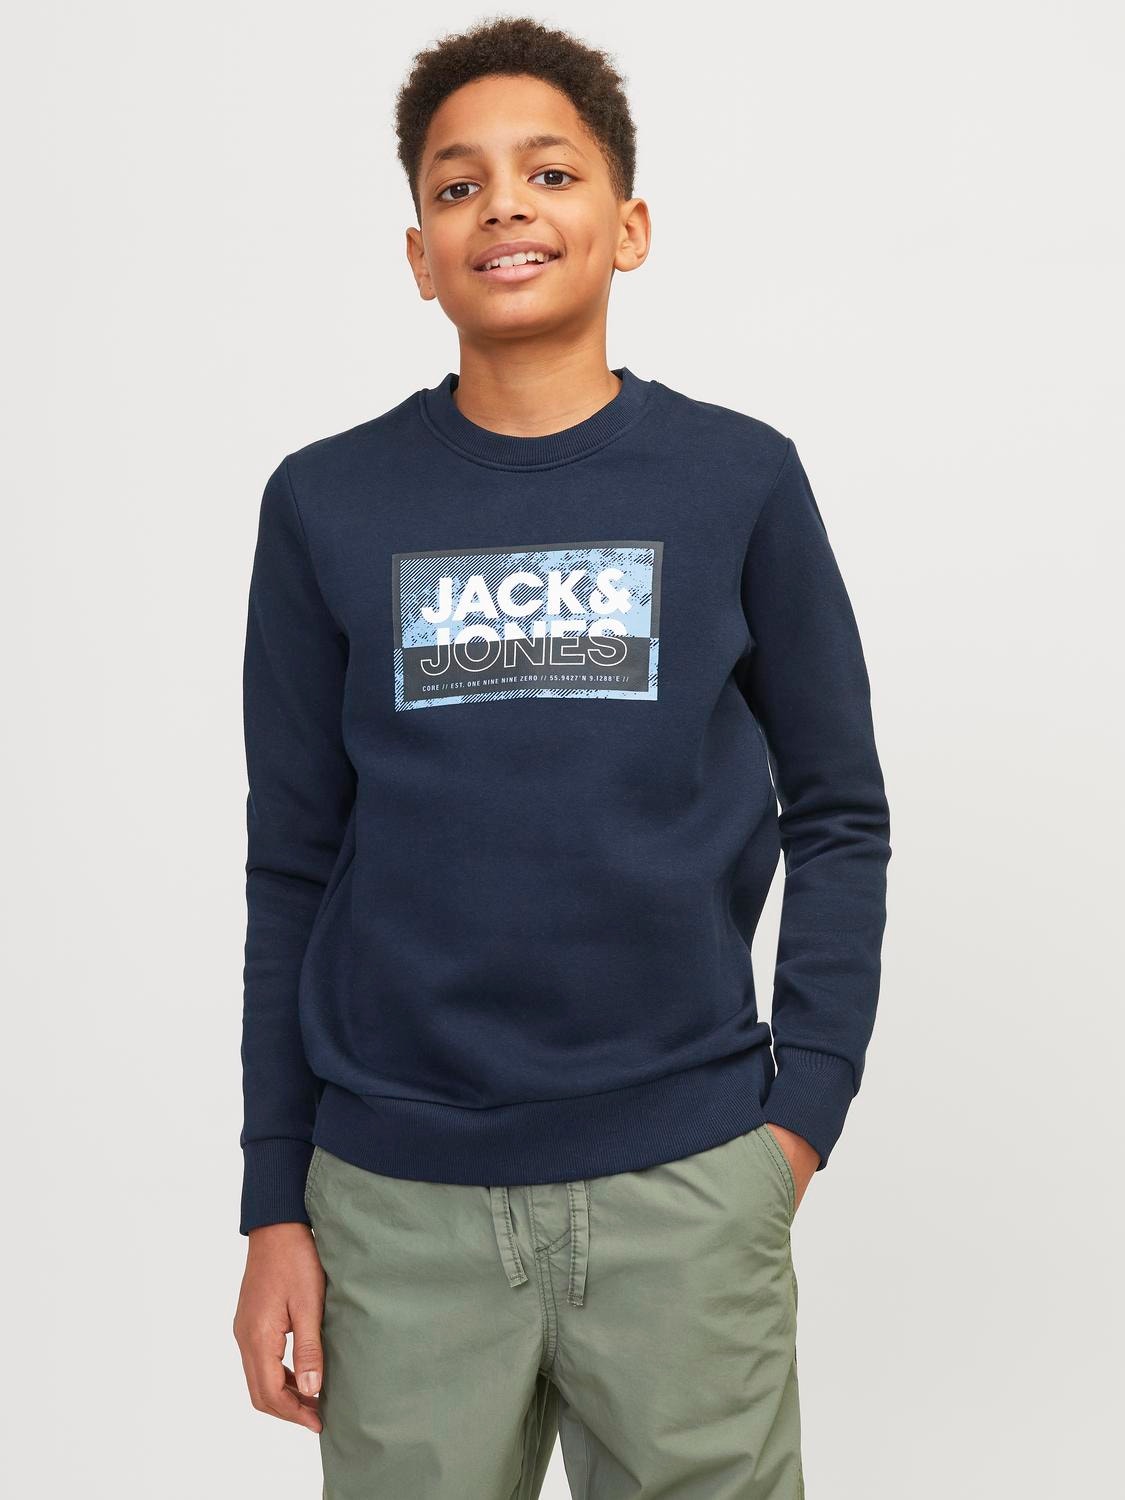 Jack & Jones Printet Sweatshirt med rund hals Til drenge -Navy Blazer - 12257439